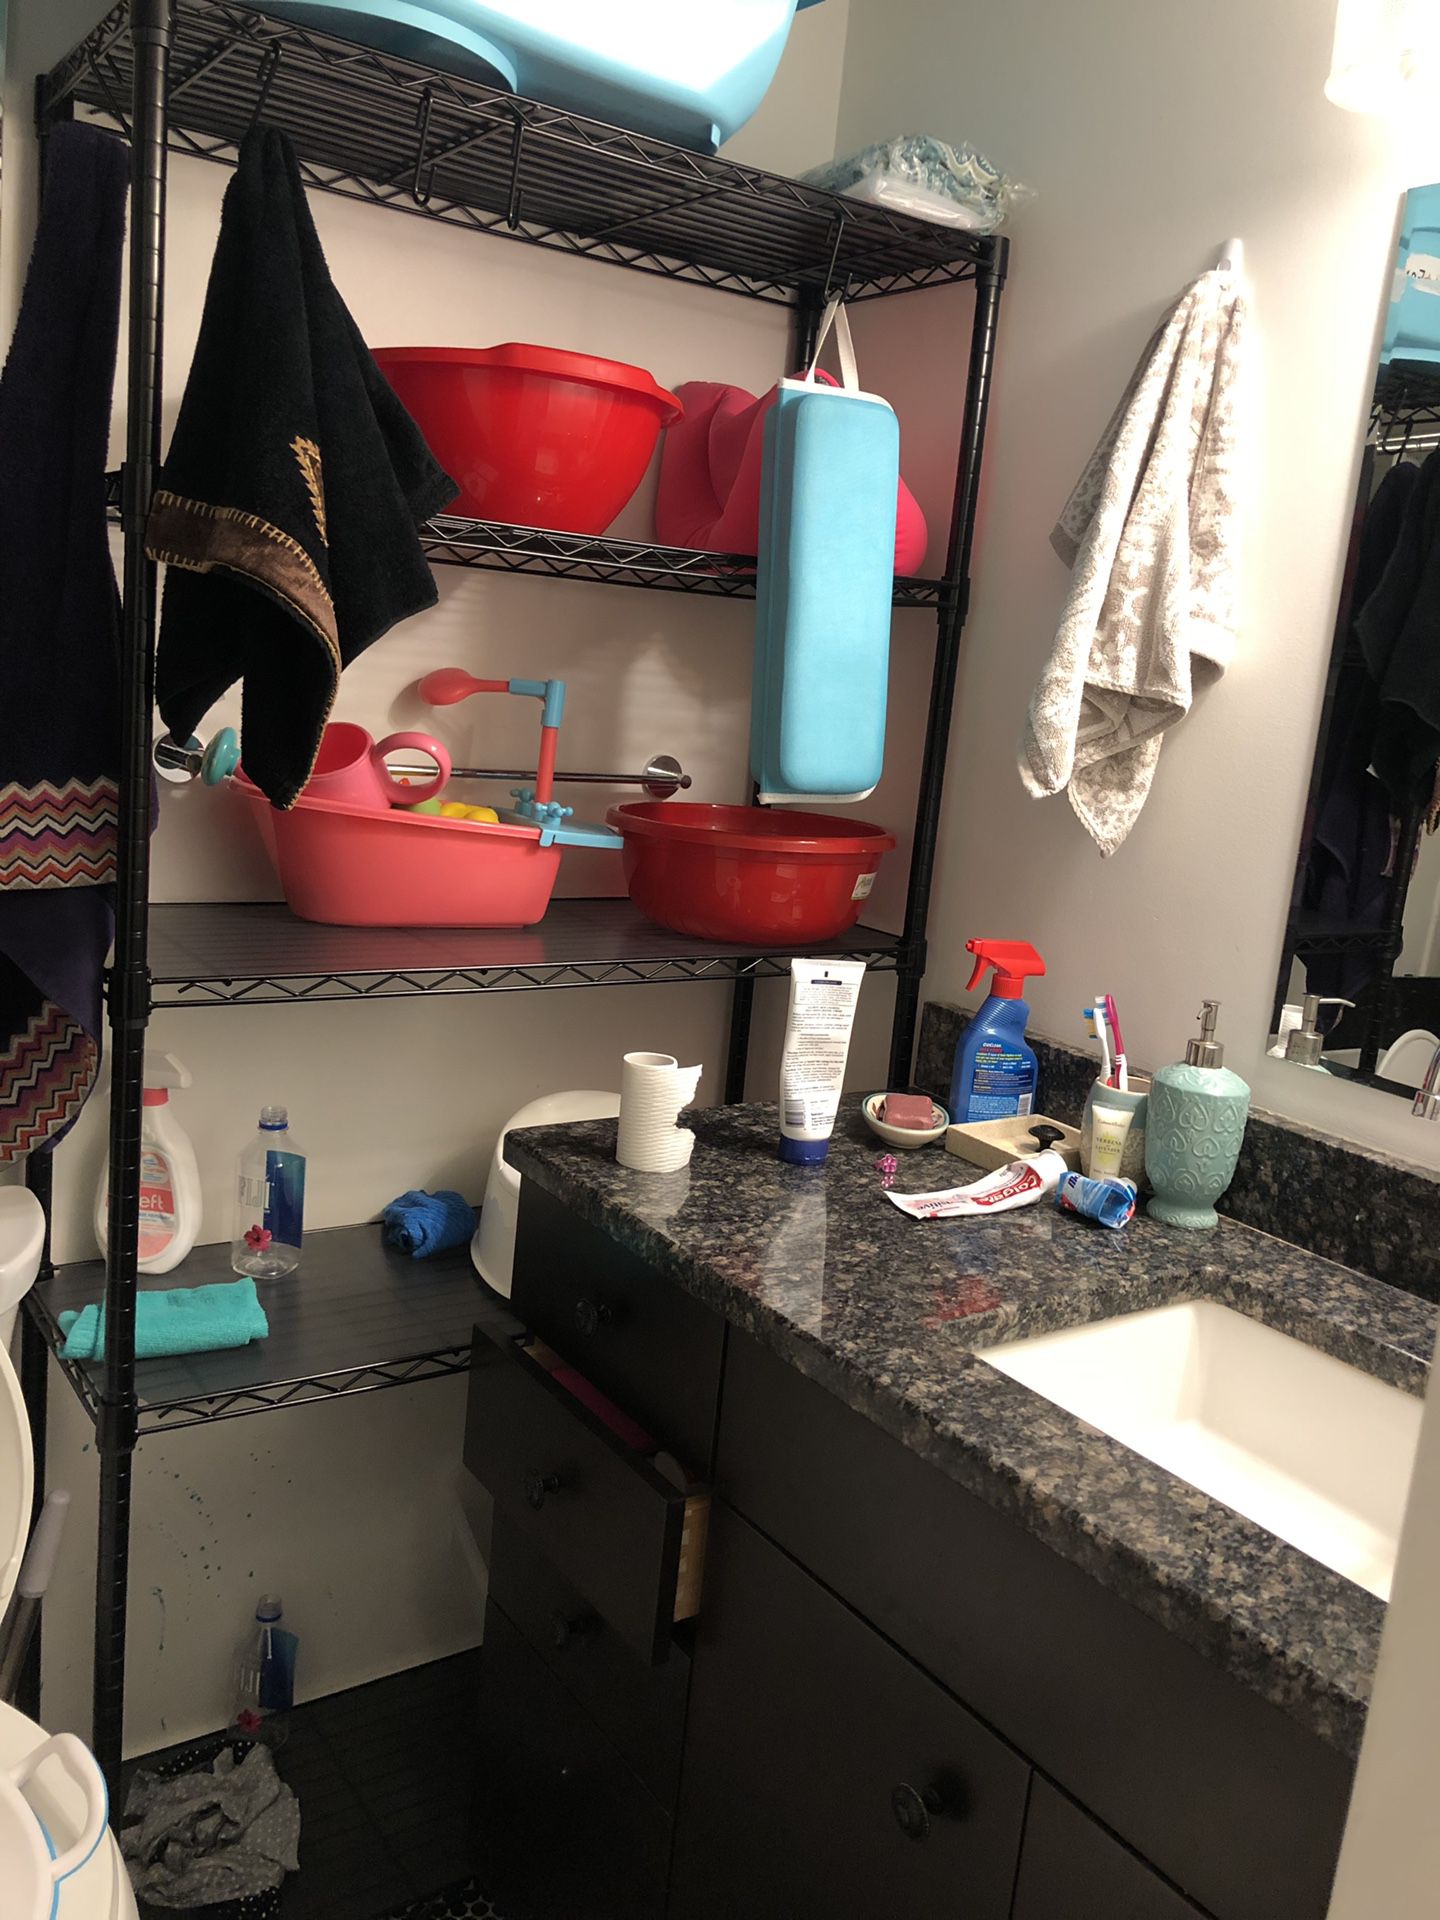 Bathroom organizer 5 shelves with hangers